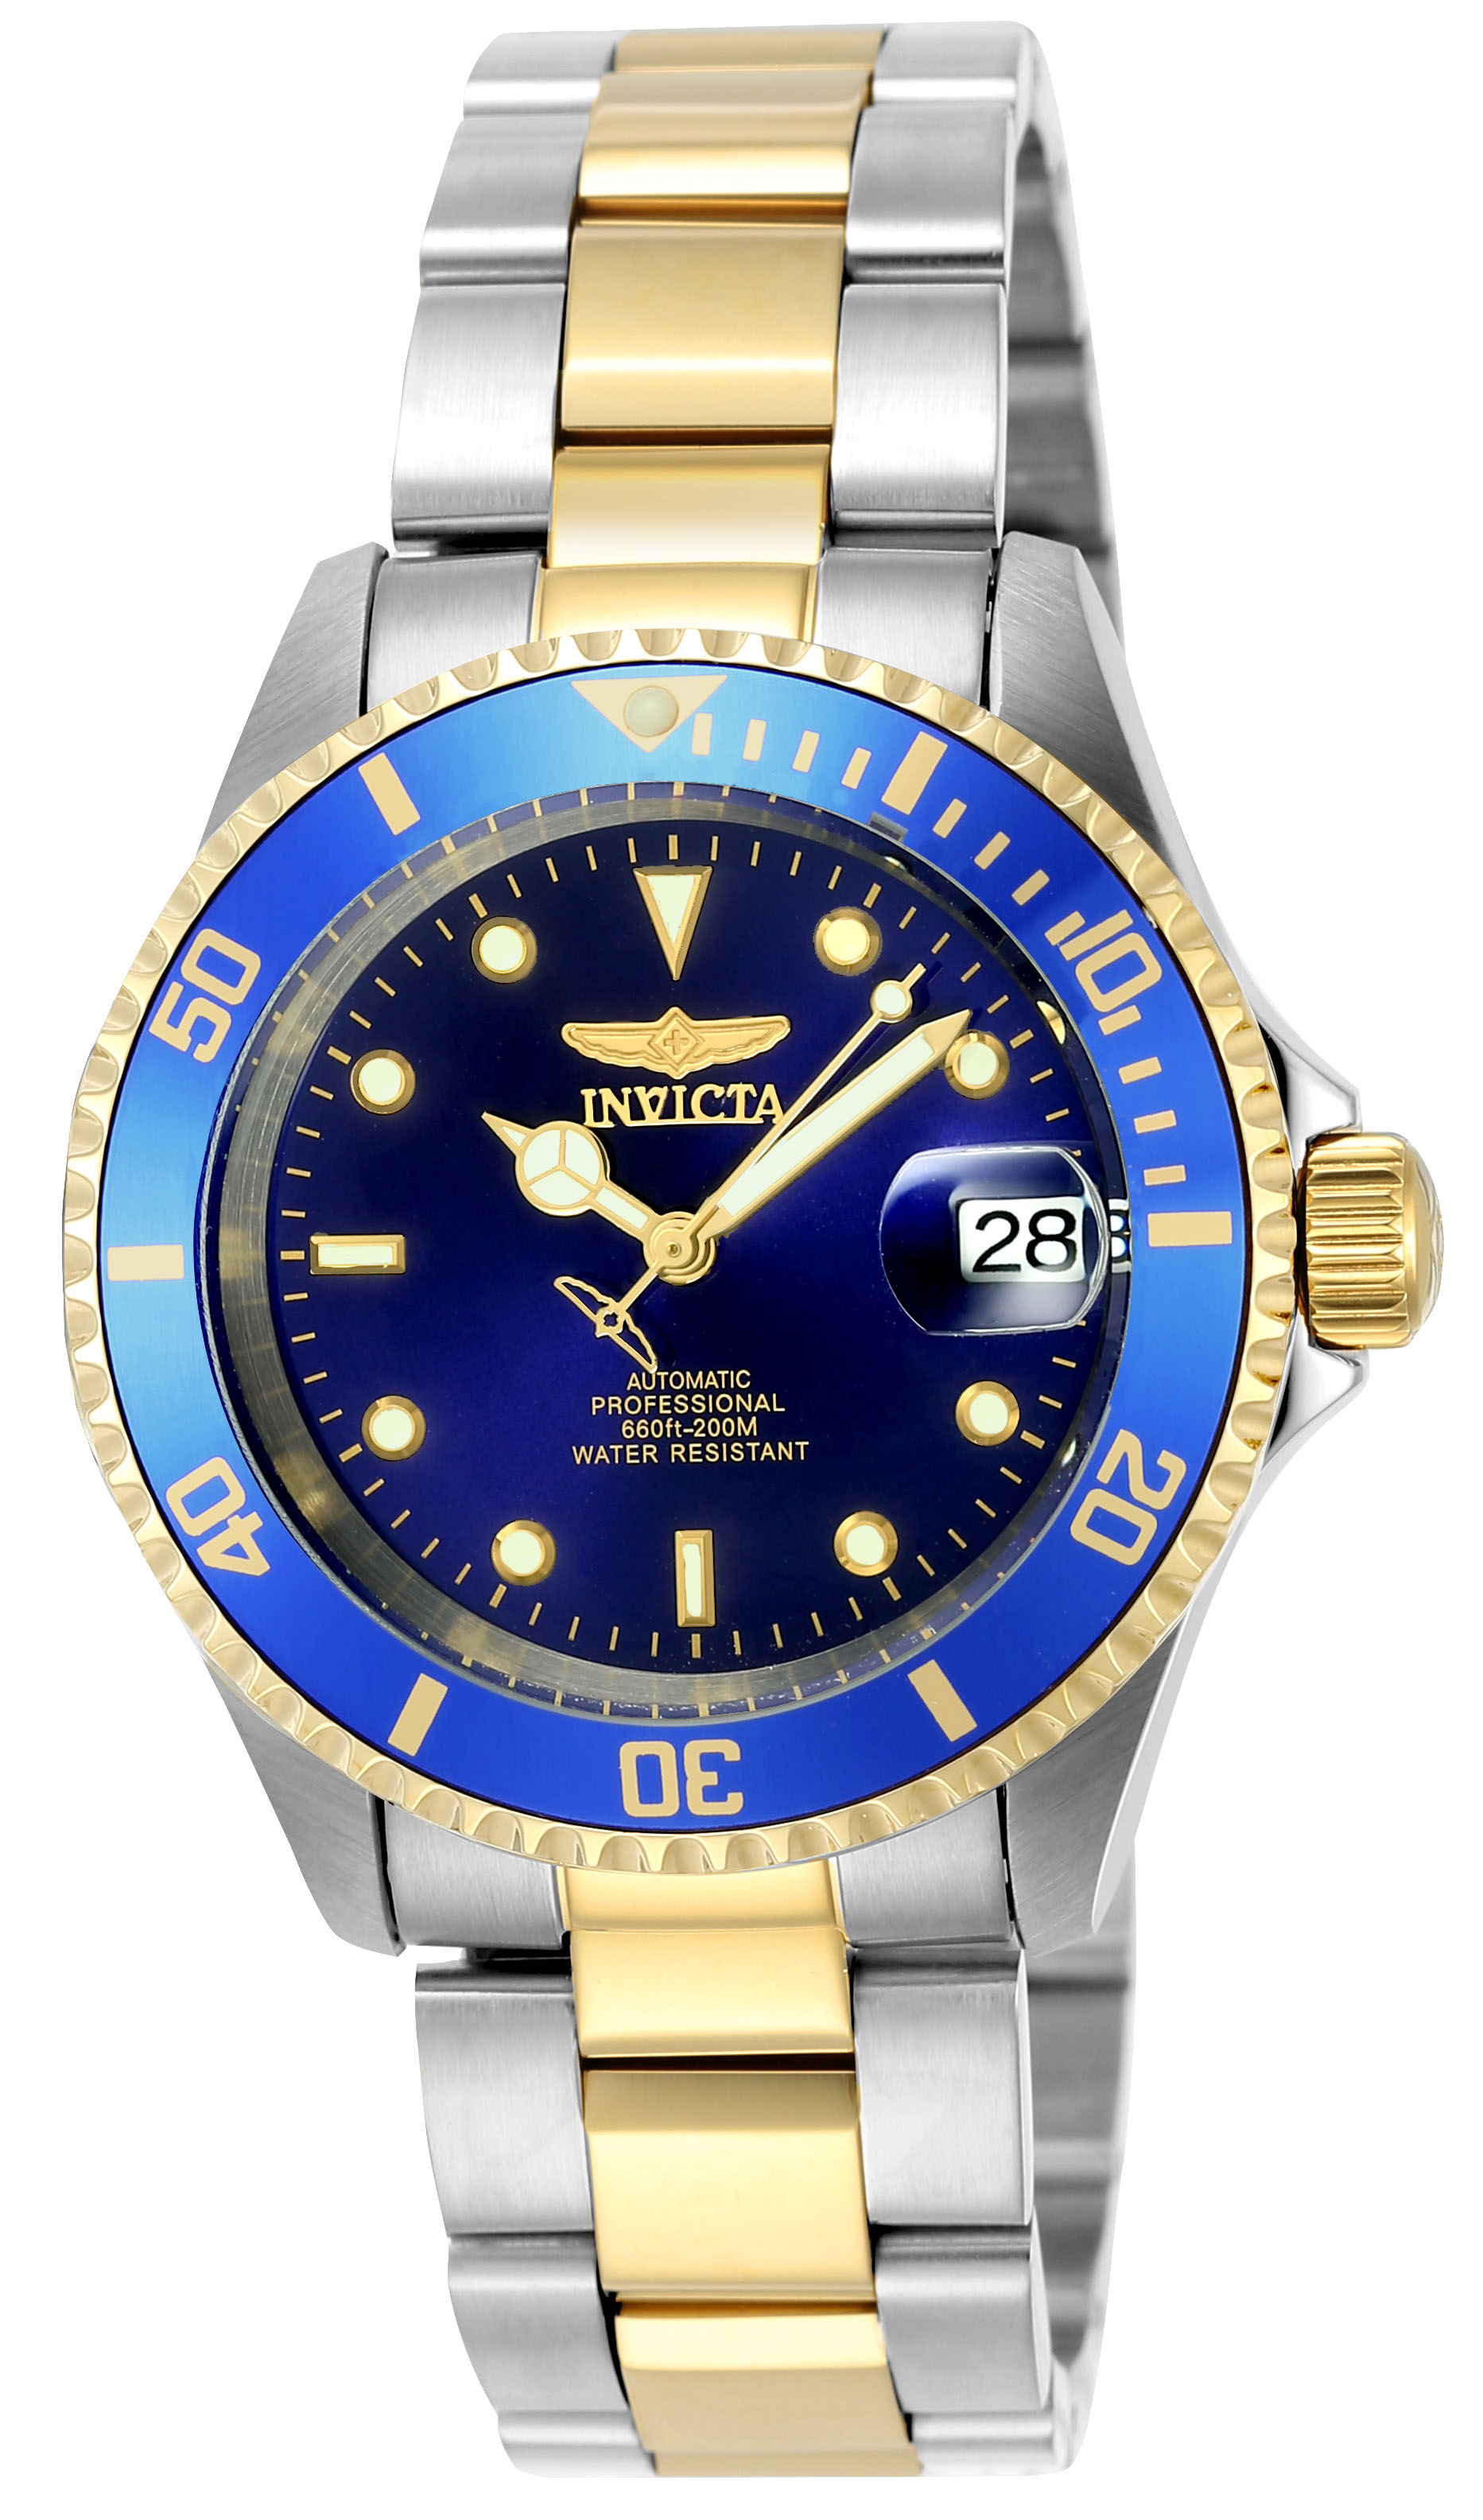 Invicta Pro Diver Automatic Men's Watch - 40mm, Steel, Gold (8928OB)